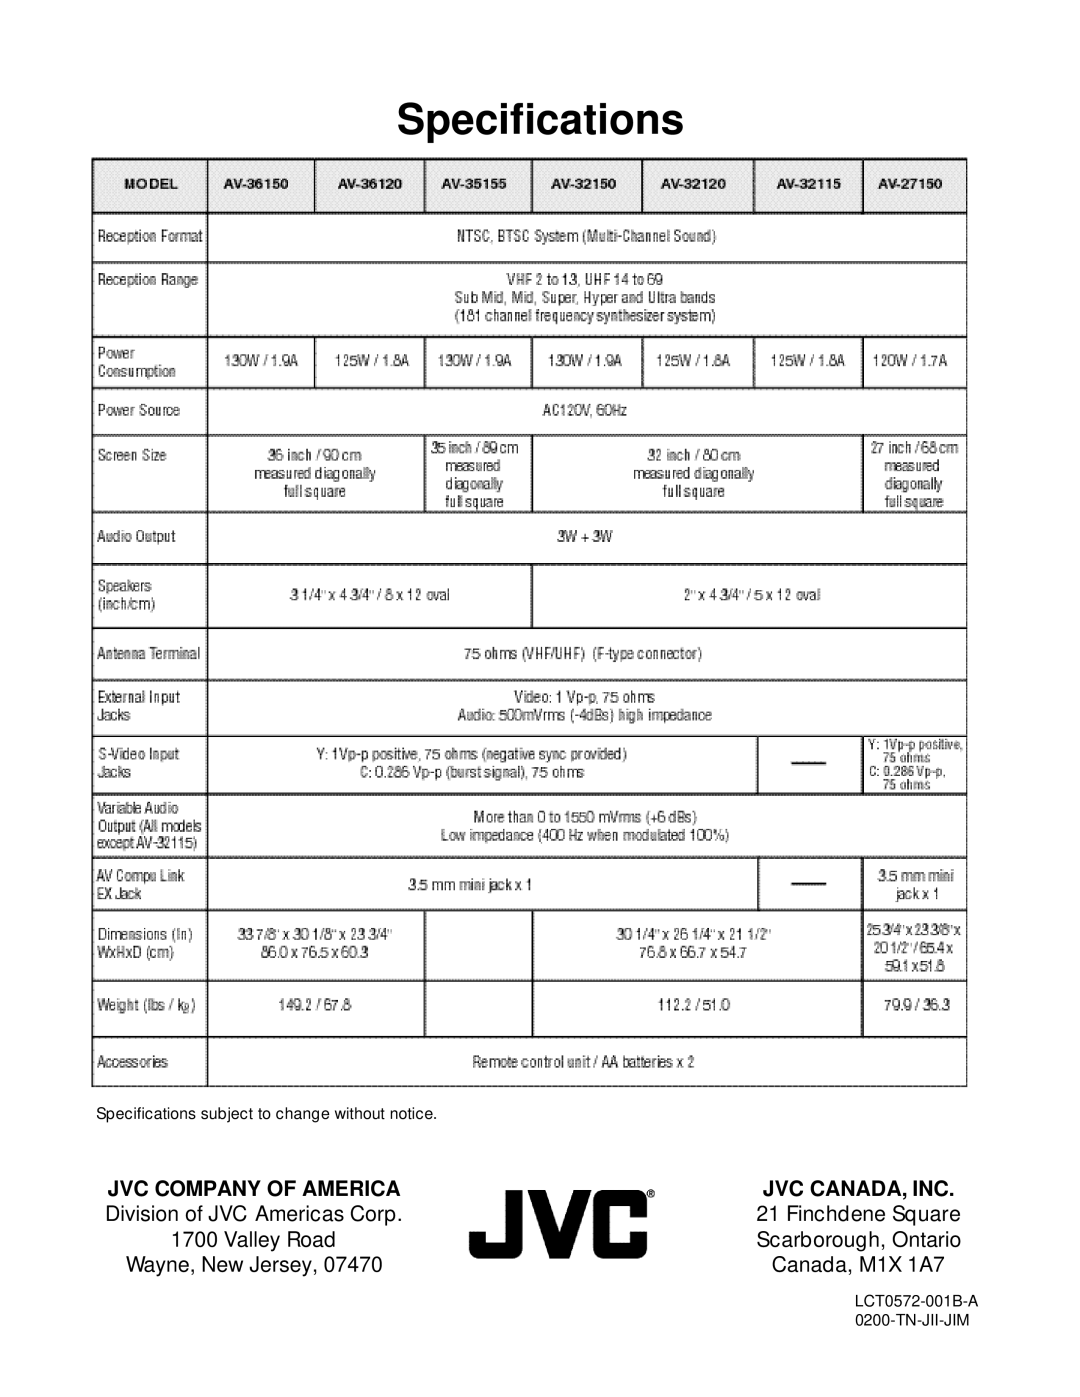 JVC AV 32120 Specifications, Jvc Company Of America, Jvc Canada, Inc, Division of JVC Americas Corp, Finchdene Square 